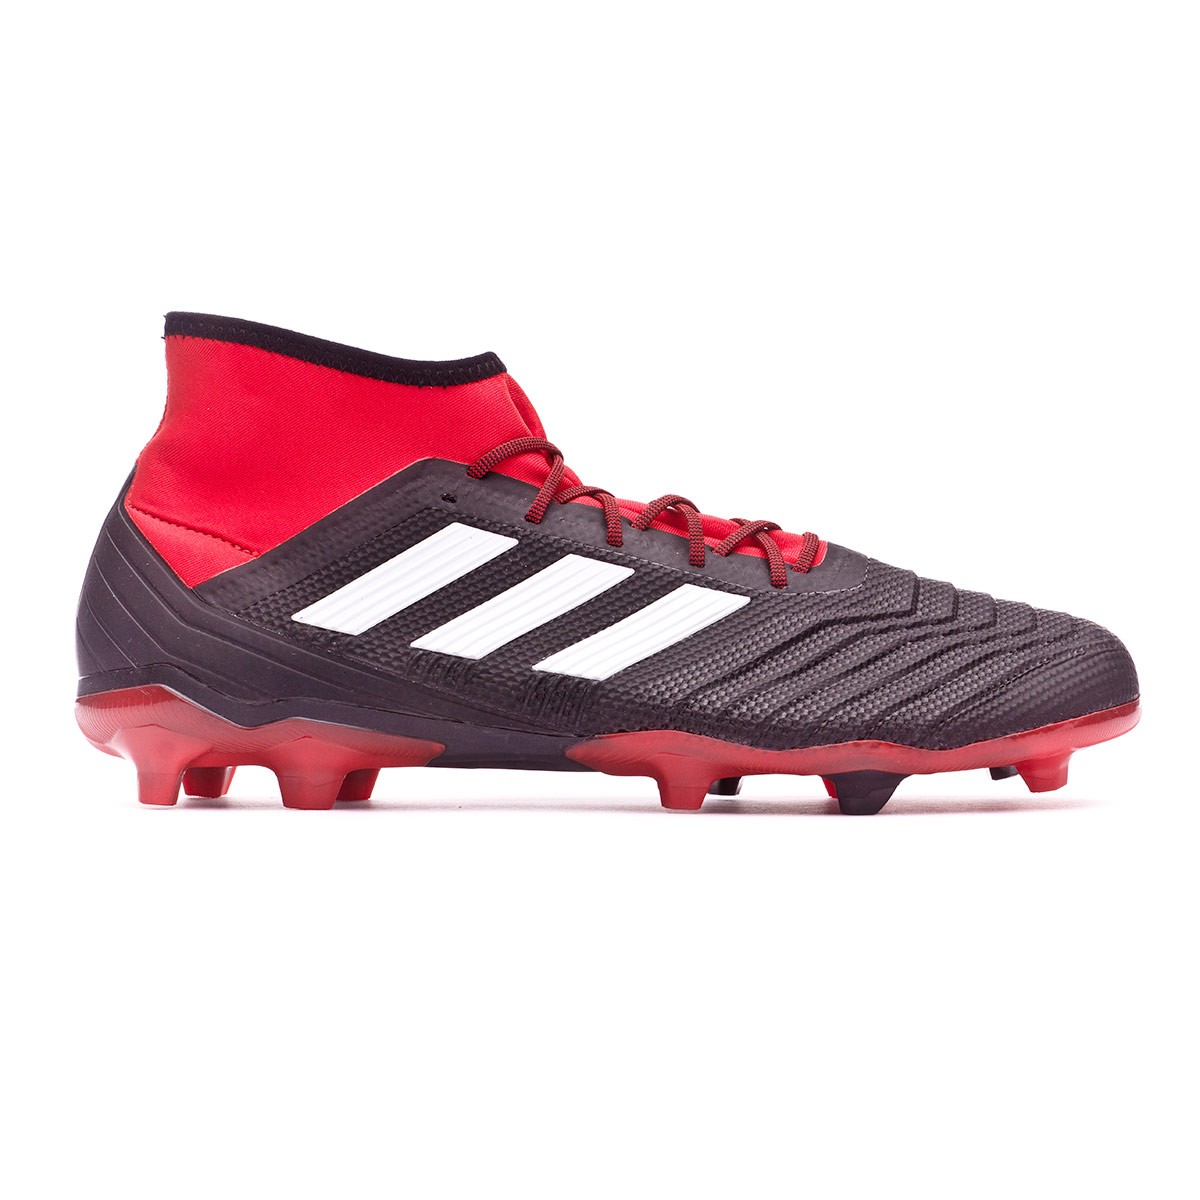 adidas predator 18.2 fg football boots